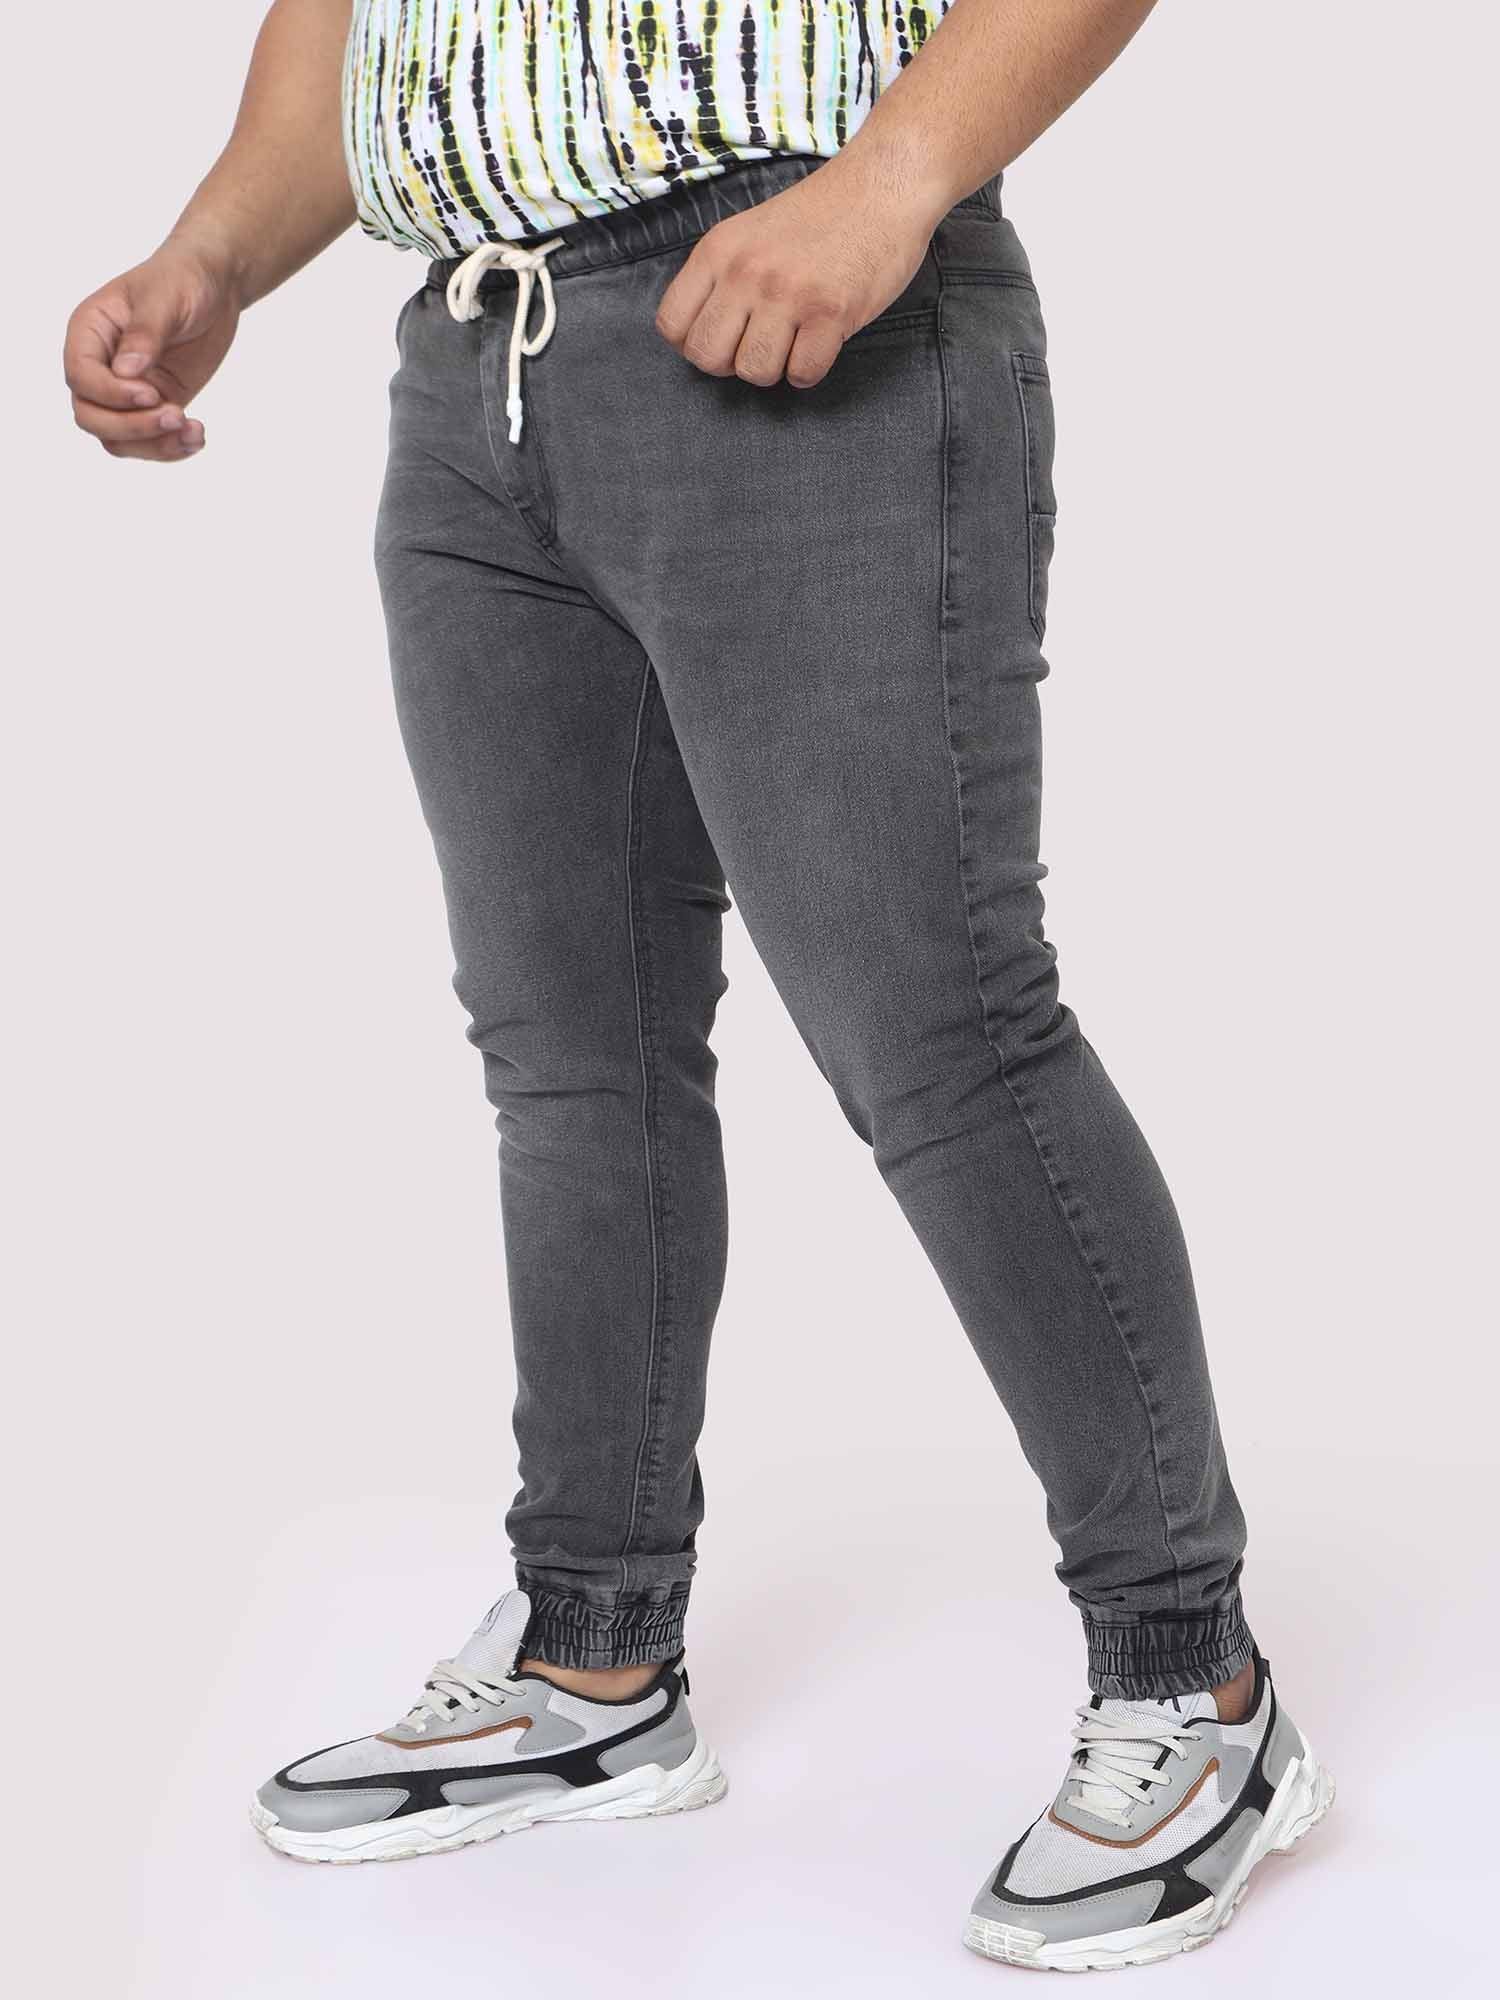 Men's Plus Size Pebble Grey Jogger Pants - Guniaa Fashions